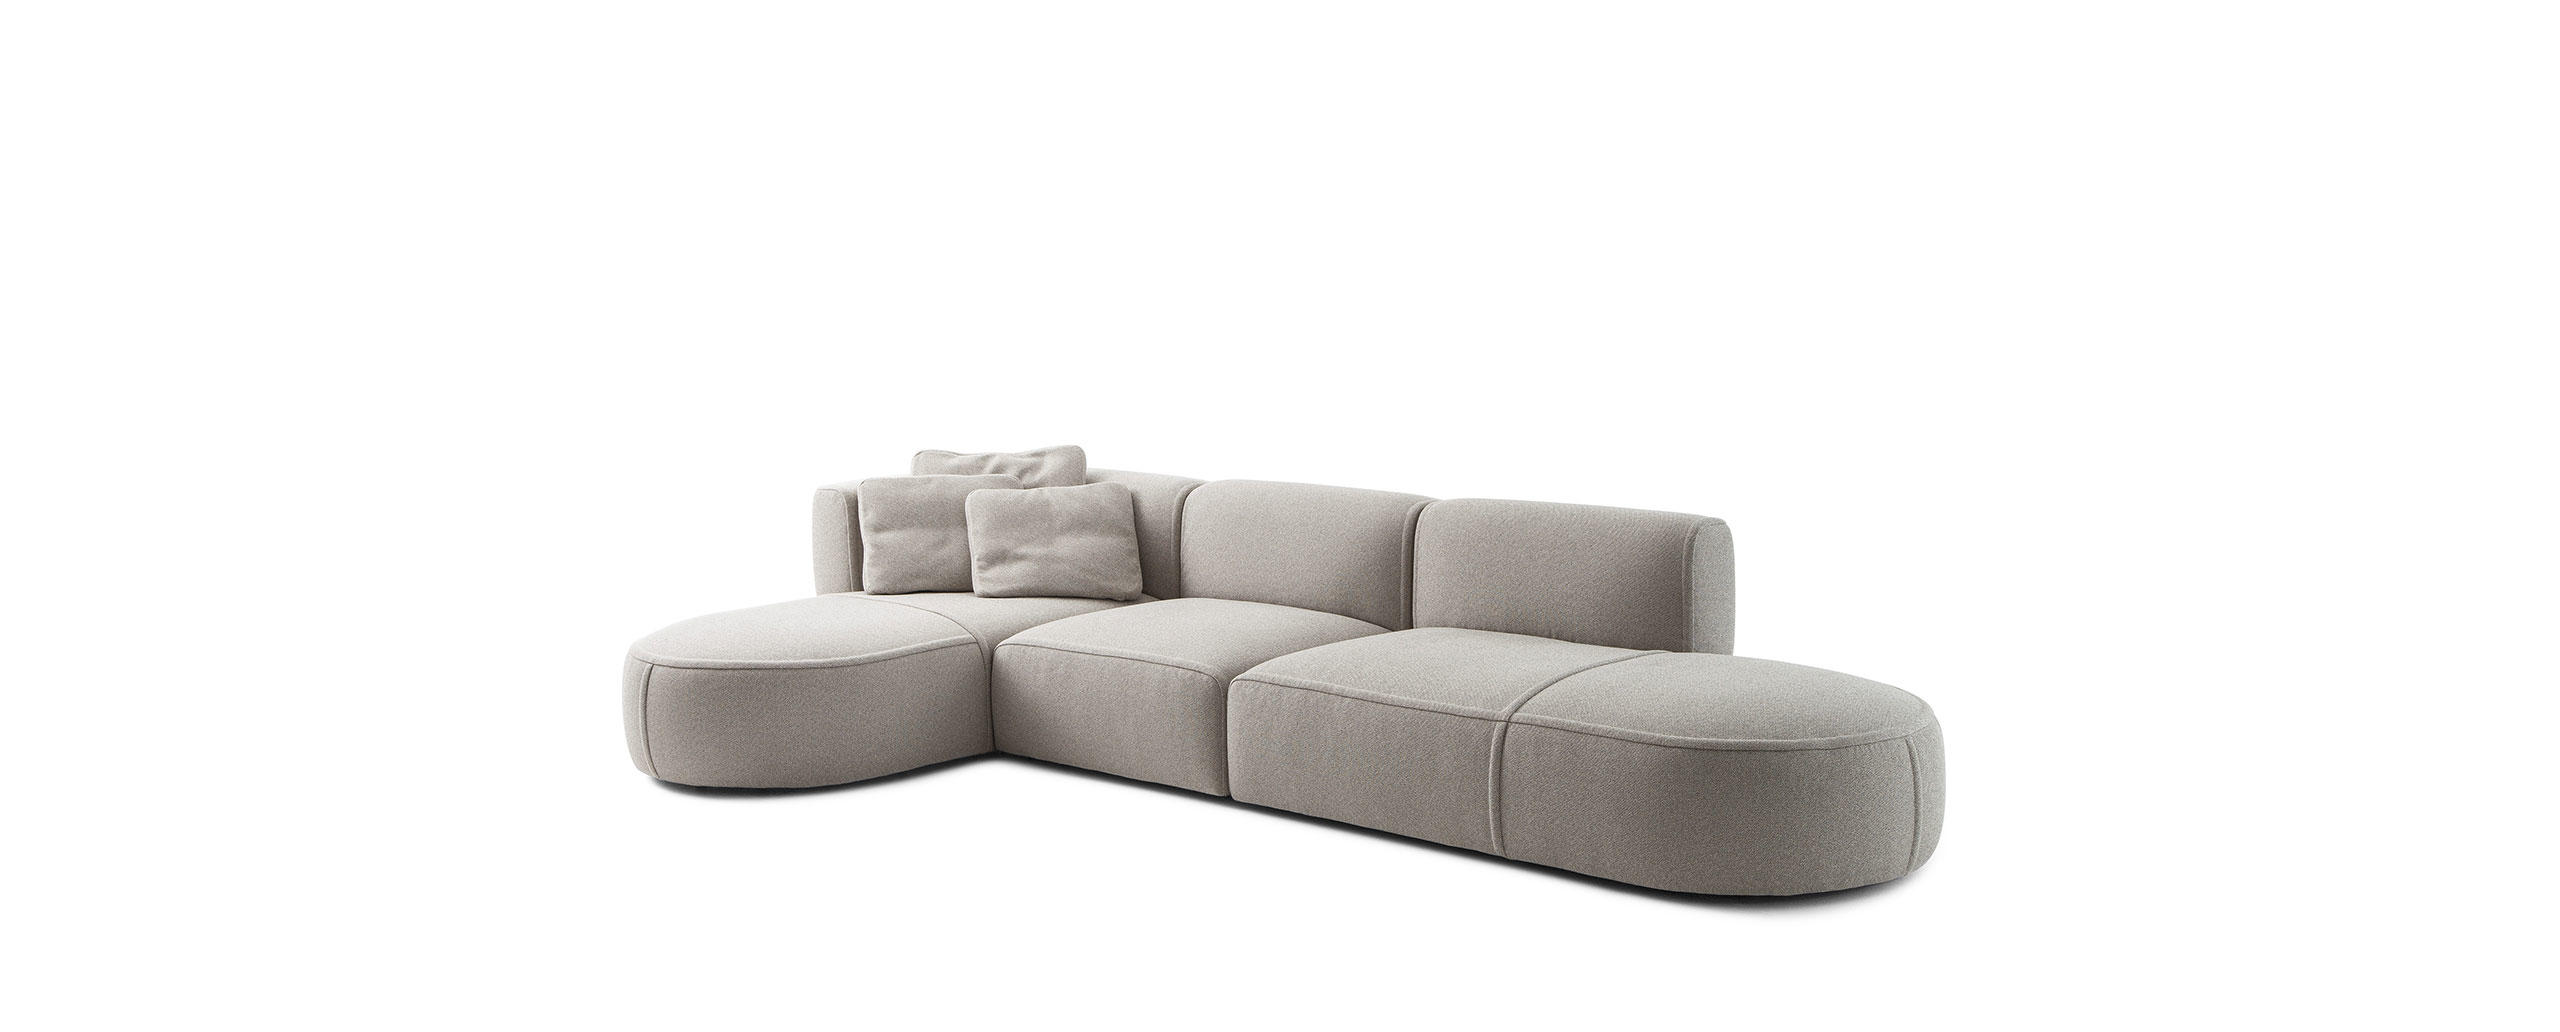 designer modern ground sofa against white background